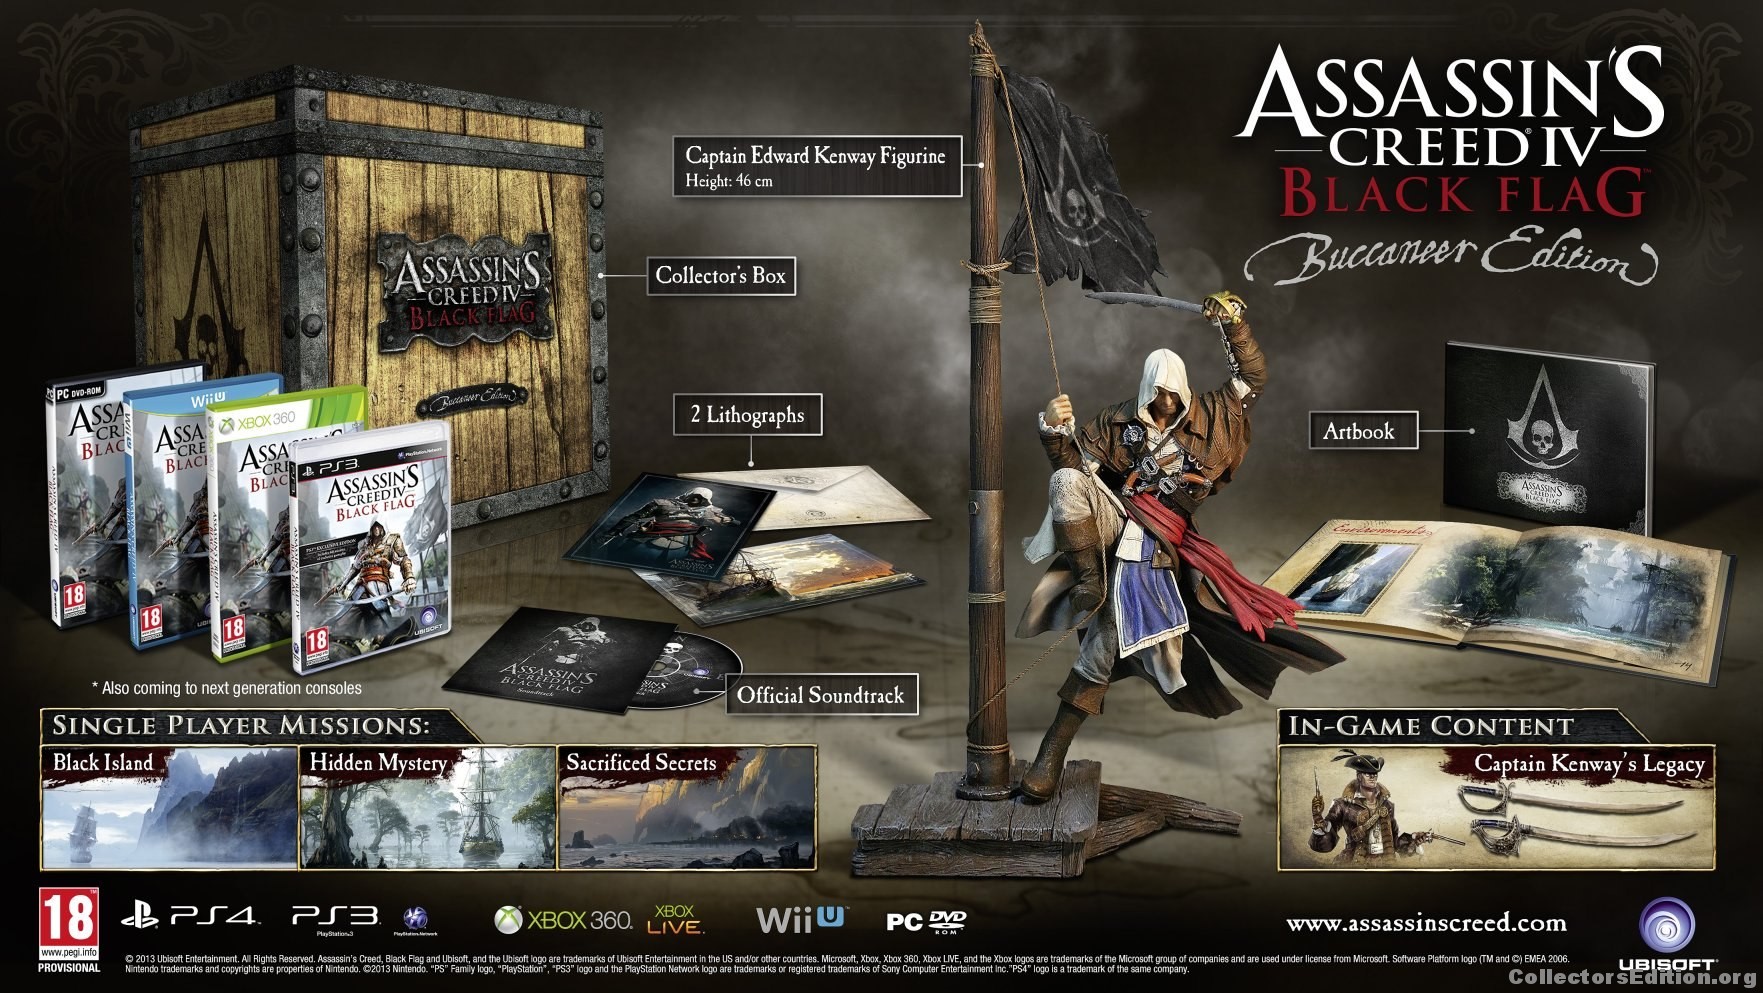 Assassins Creed Black Flag Buccaneer Edition (WiiU)